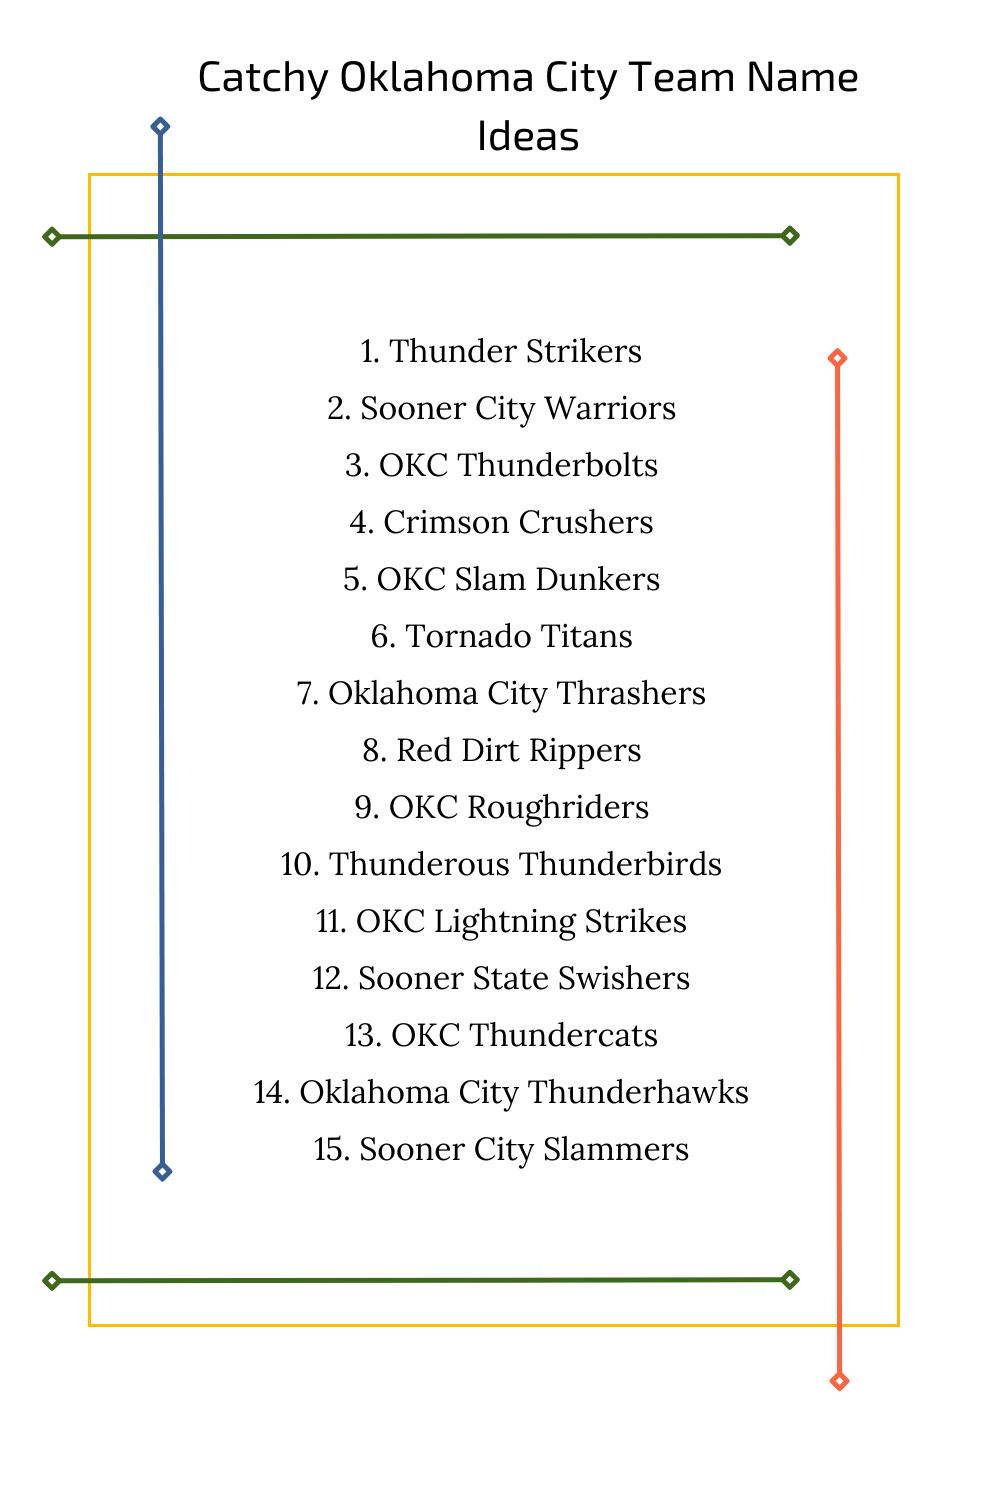 Catchy Oklahoma City Team Name Ideas